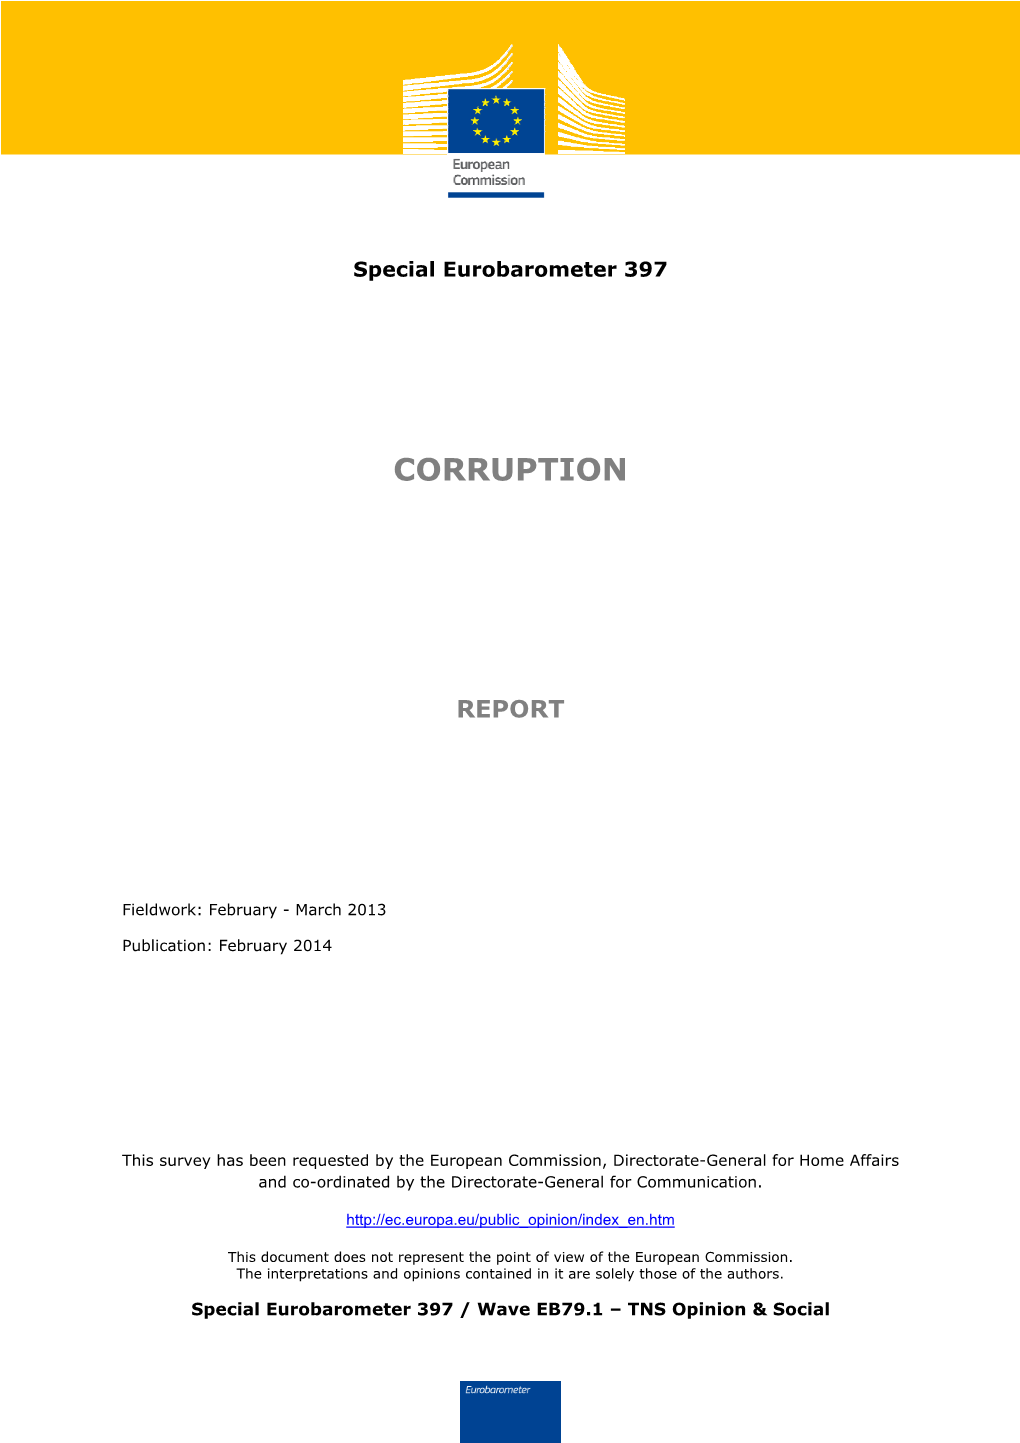 Special Eurobarometer on Corruption